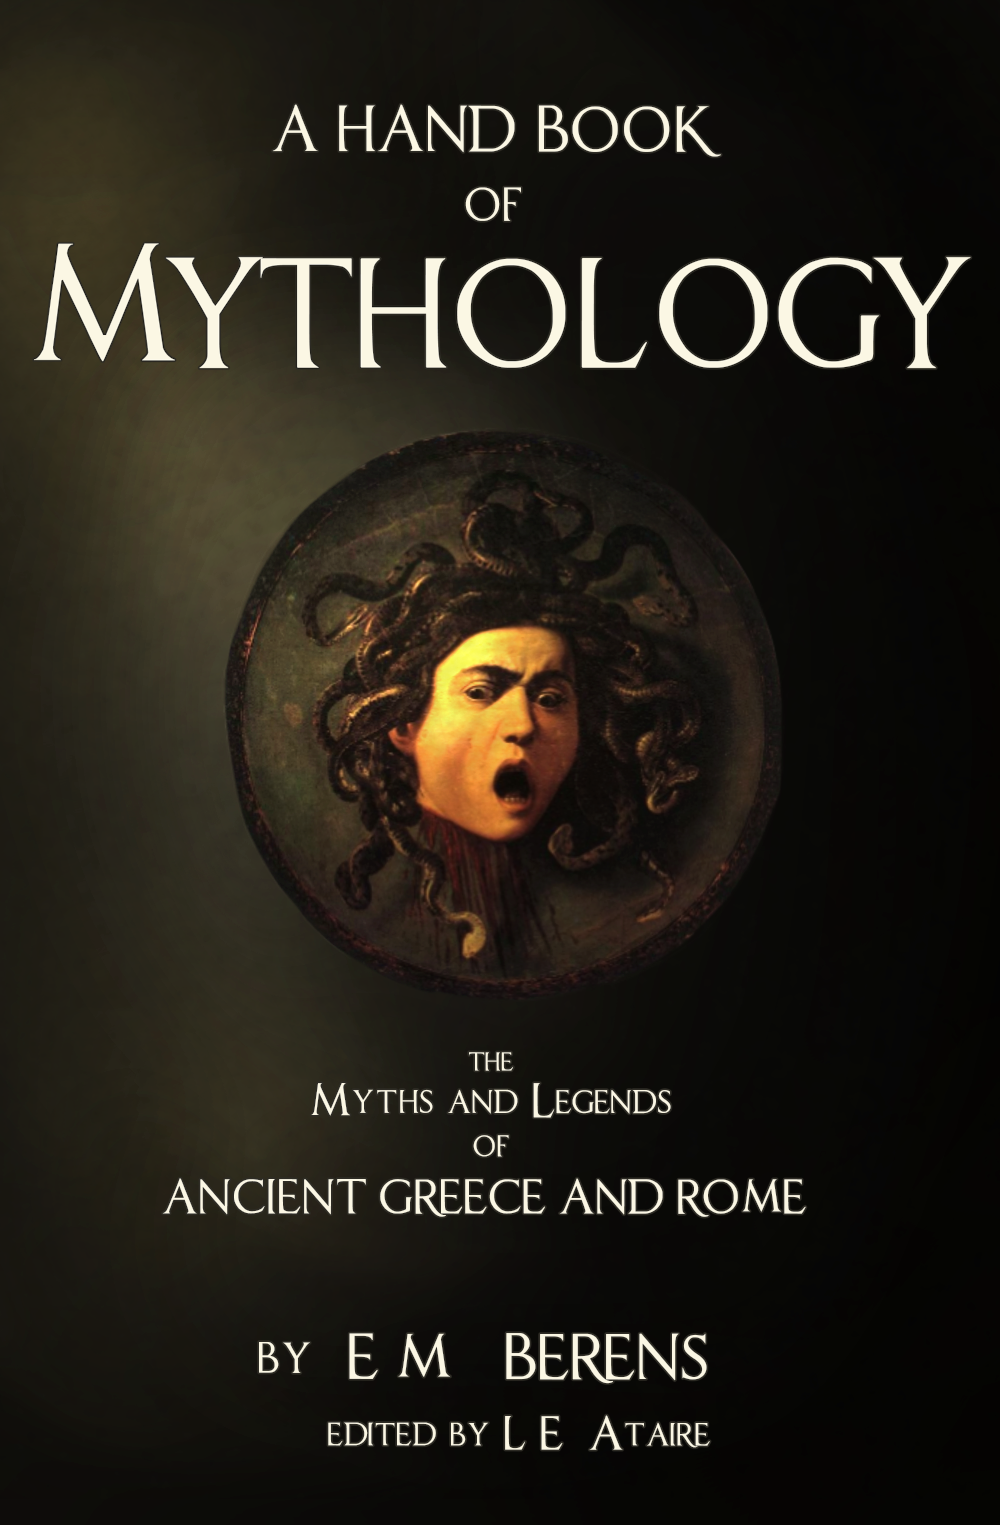 BERENS' Handbook of Mythology